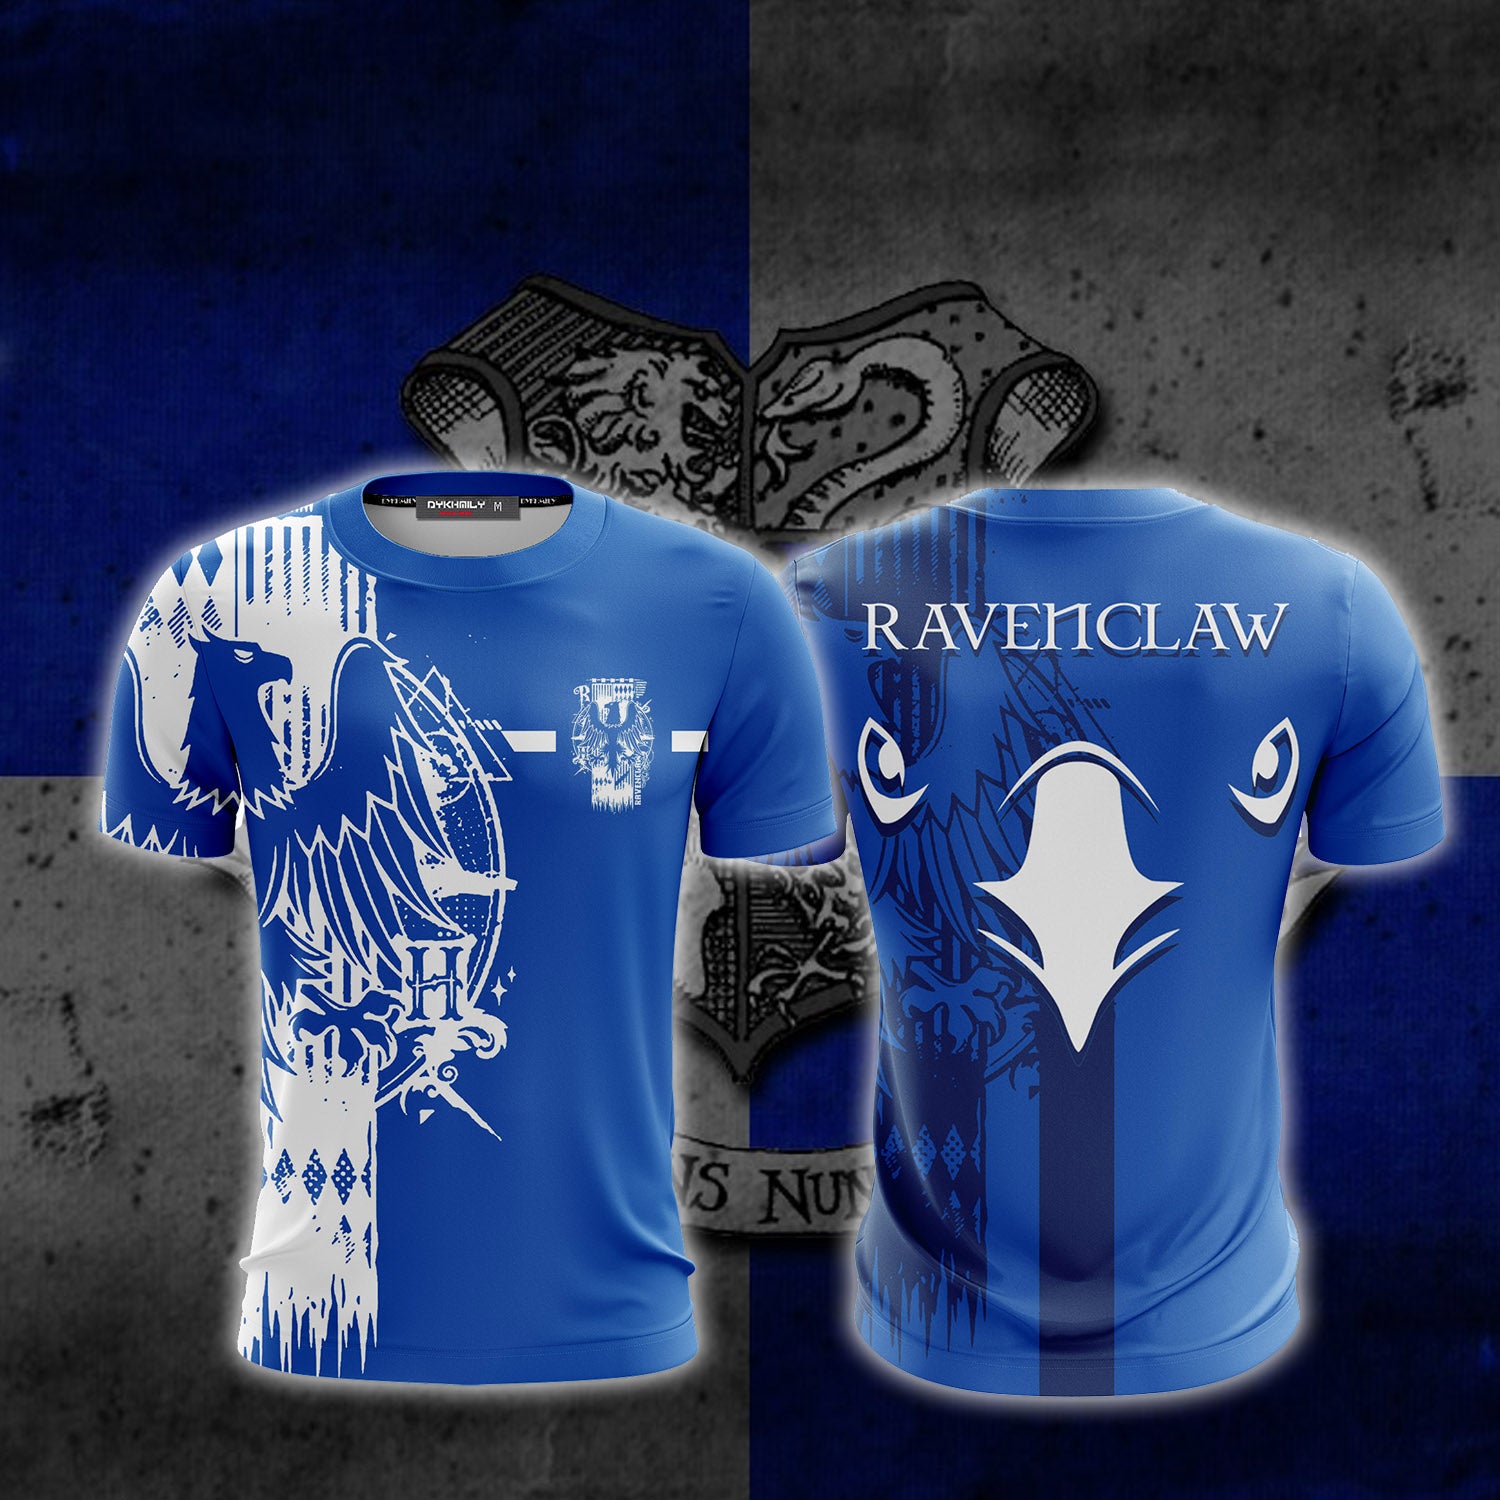 Ravenclaw T-shirt